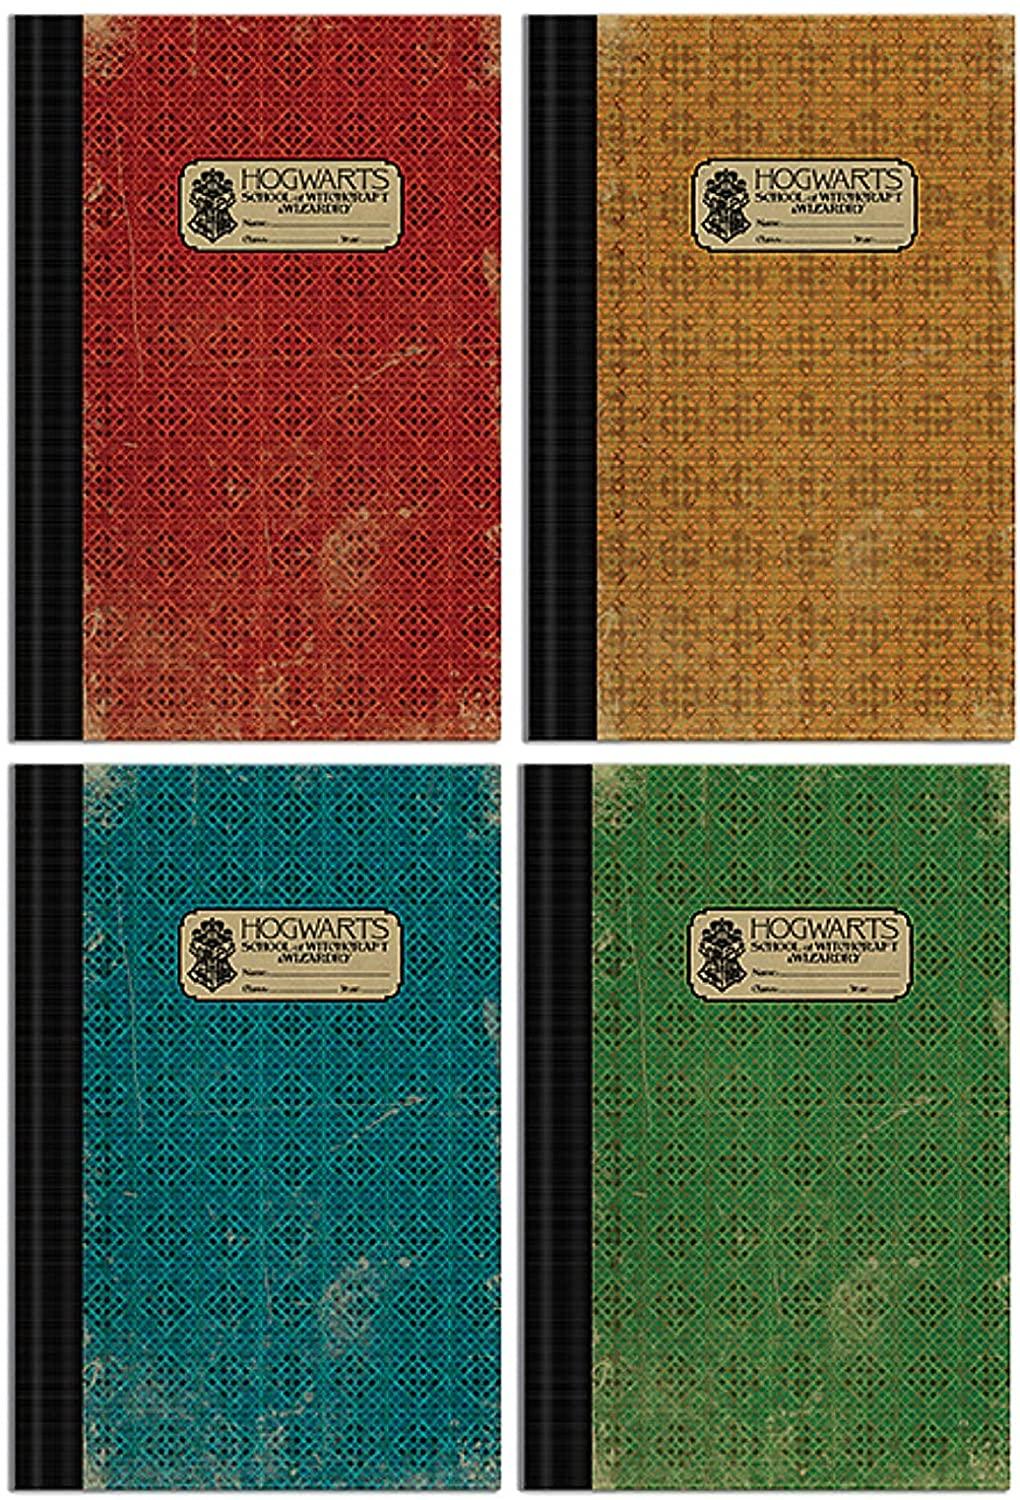 A4 Harry Potter notebooks, all 4